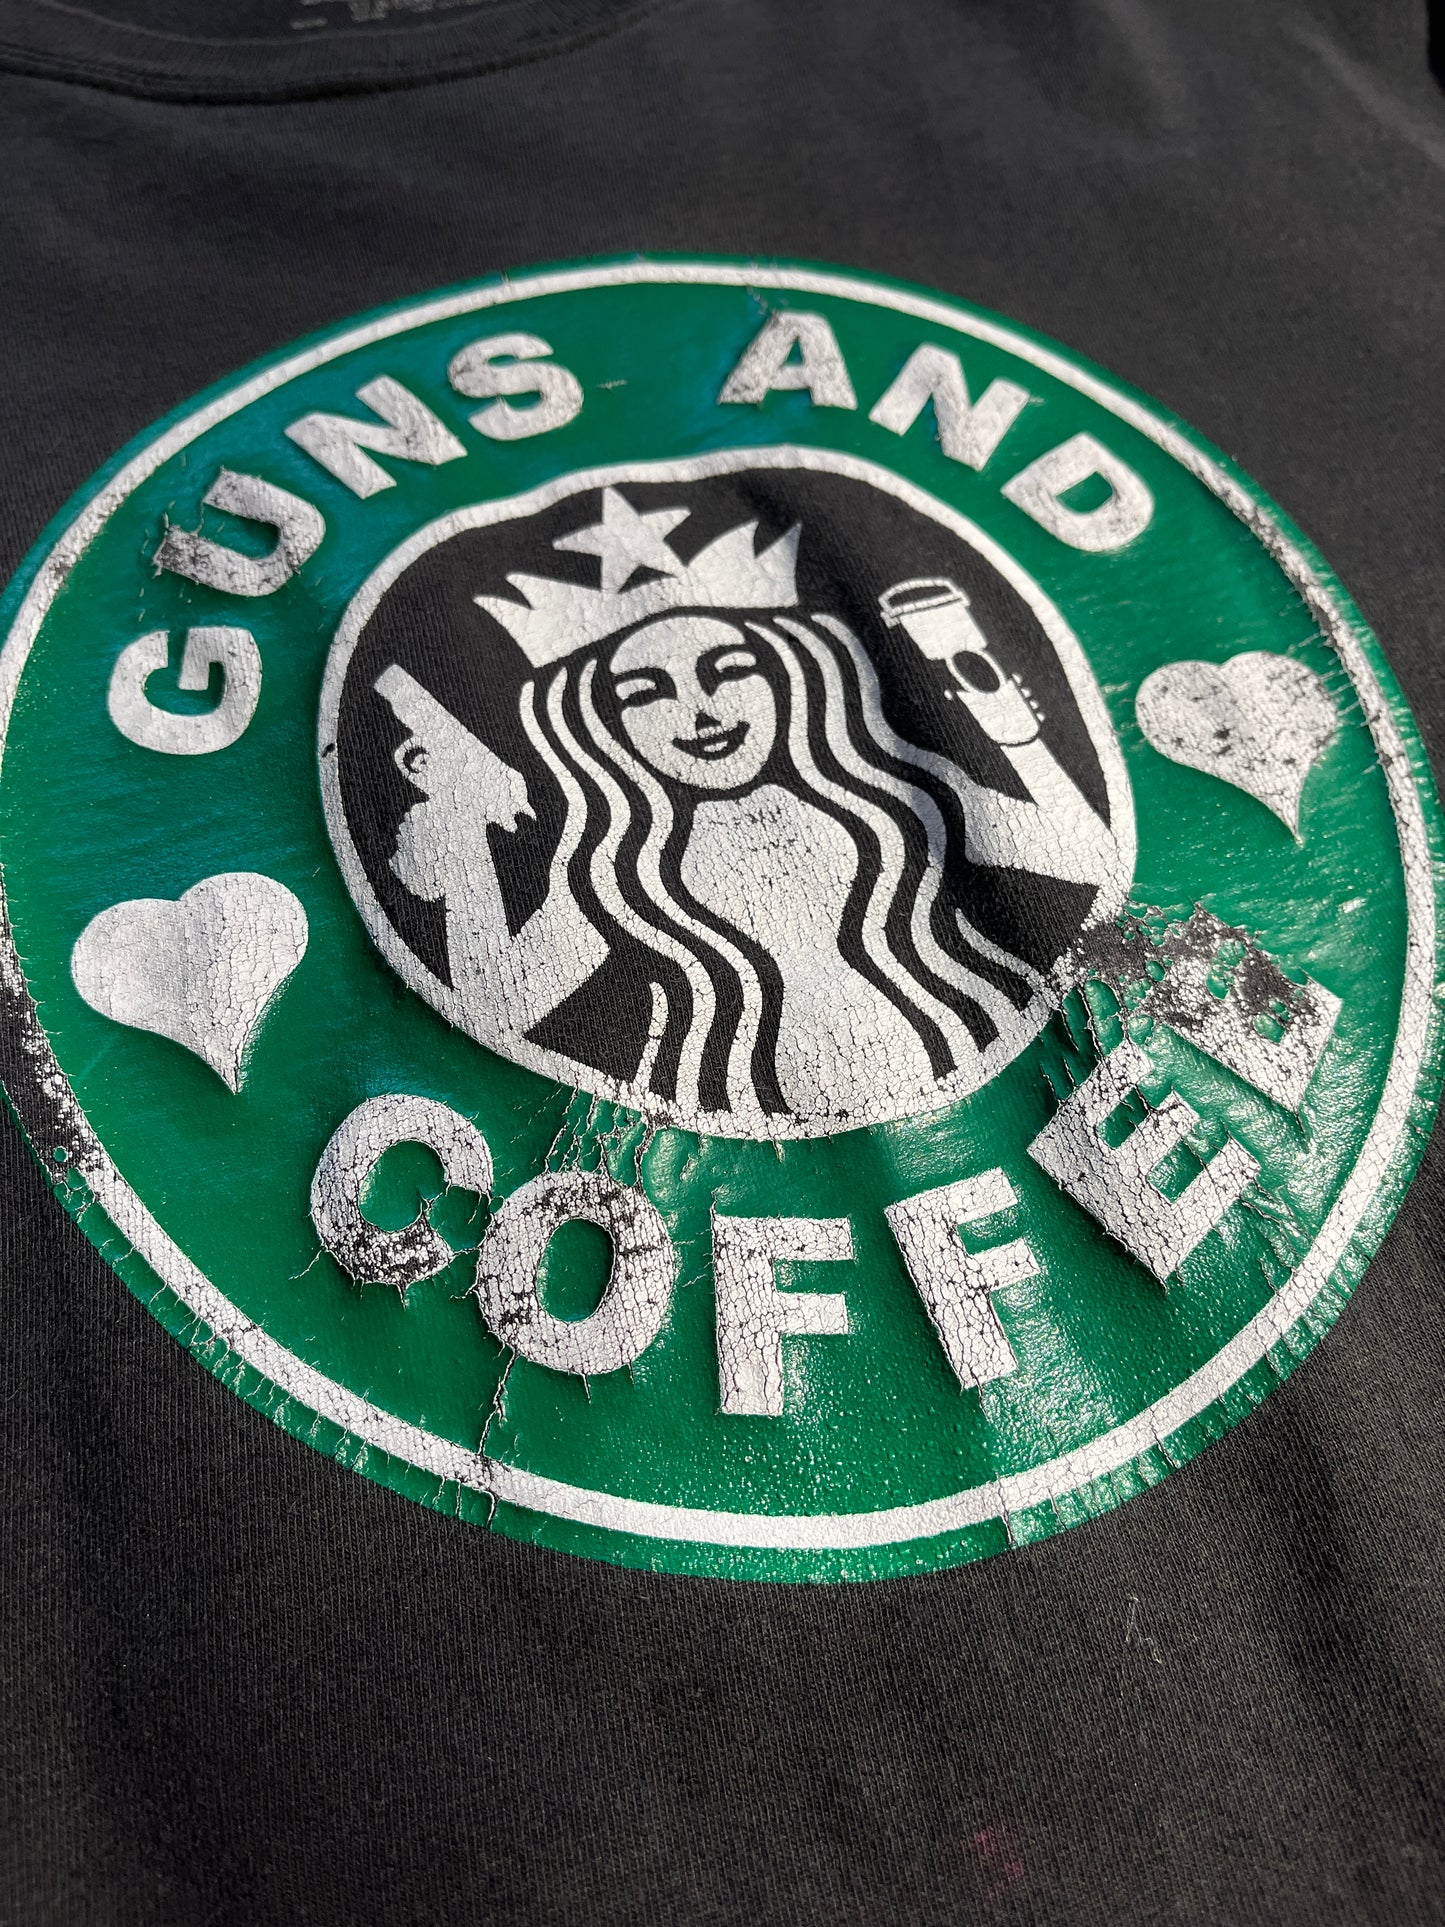 Vintage Guns and Coffee T-Shirt Starbucks Flip Lol